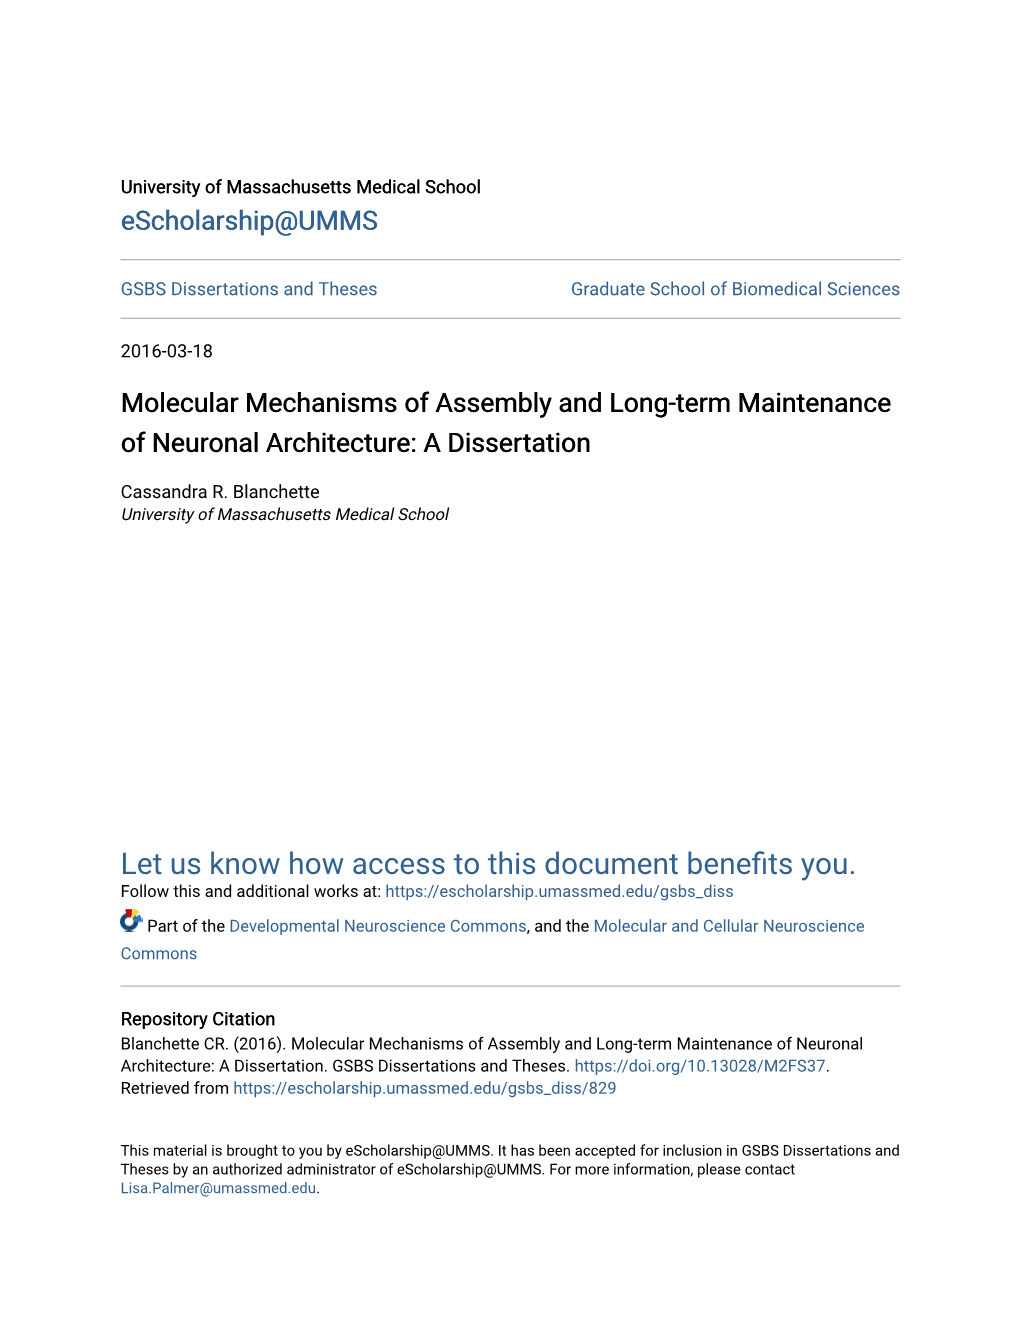 Molecular Mechanisms of Assembly and Long-Term Maintenance of Neuronal Architecture: a Dissertation